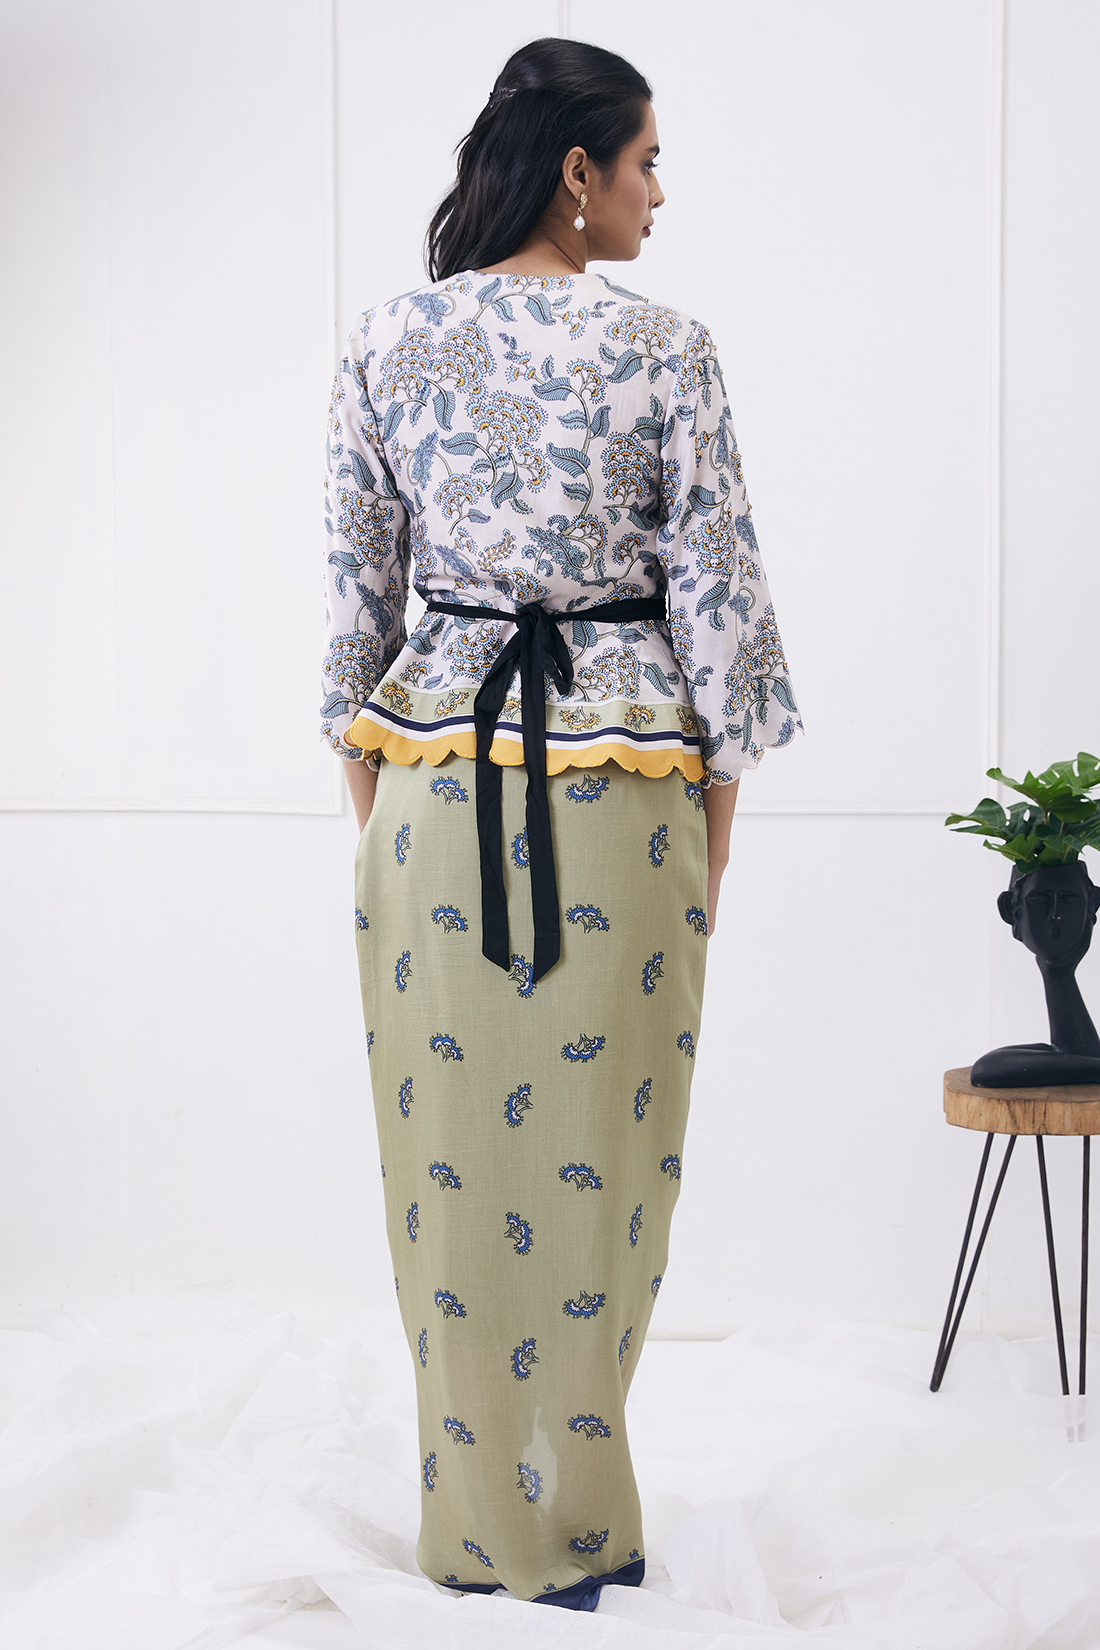 Printed Drape Skirt with Peplum Top